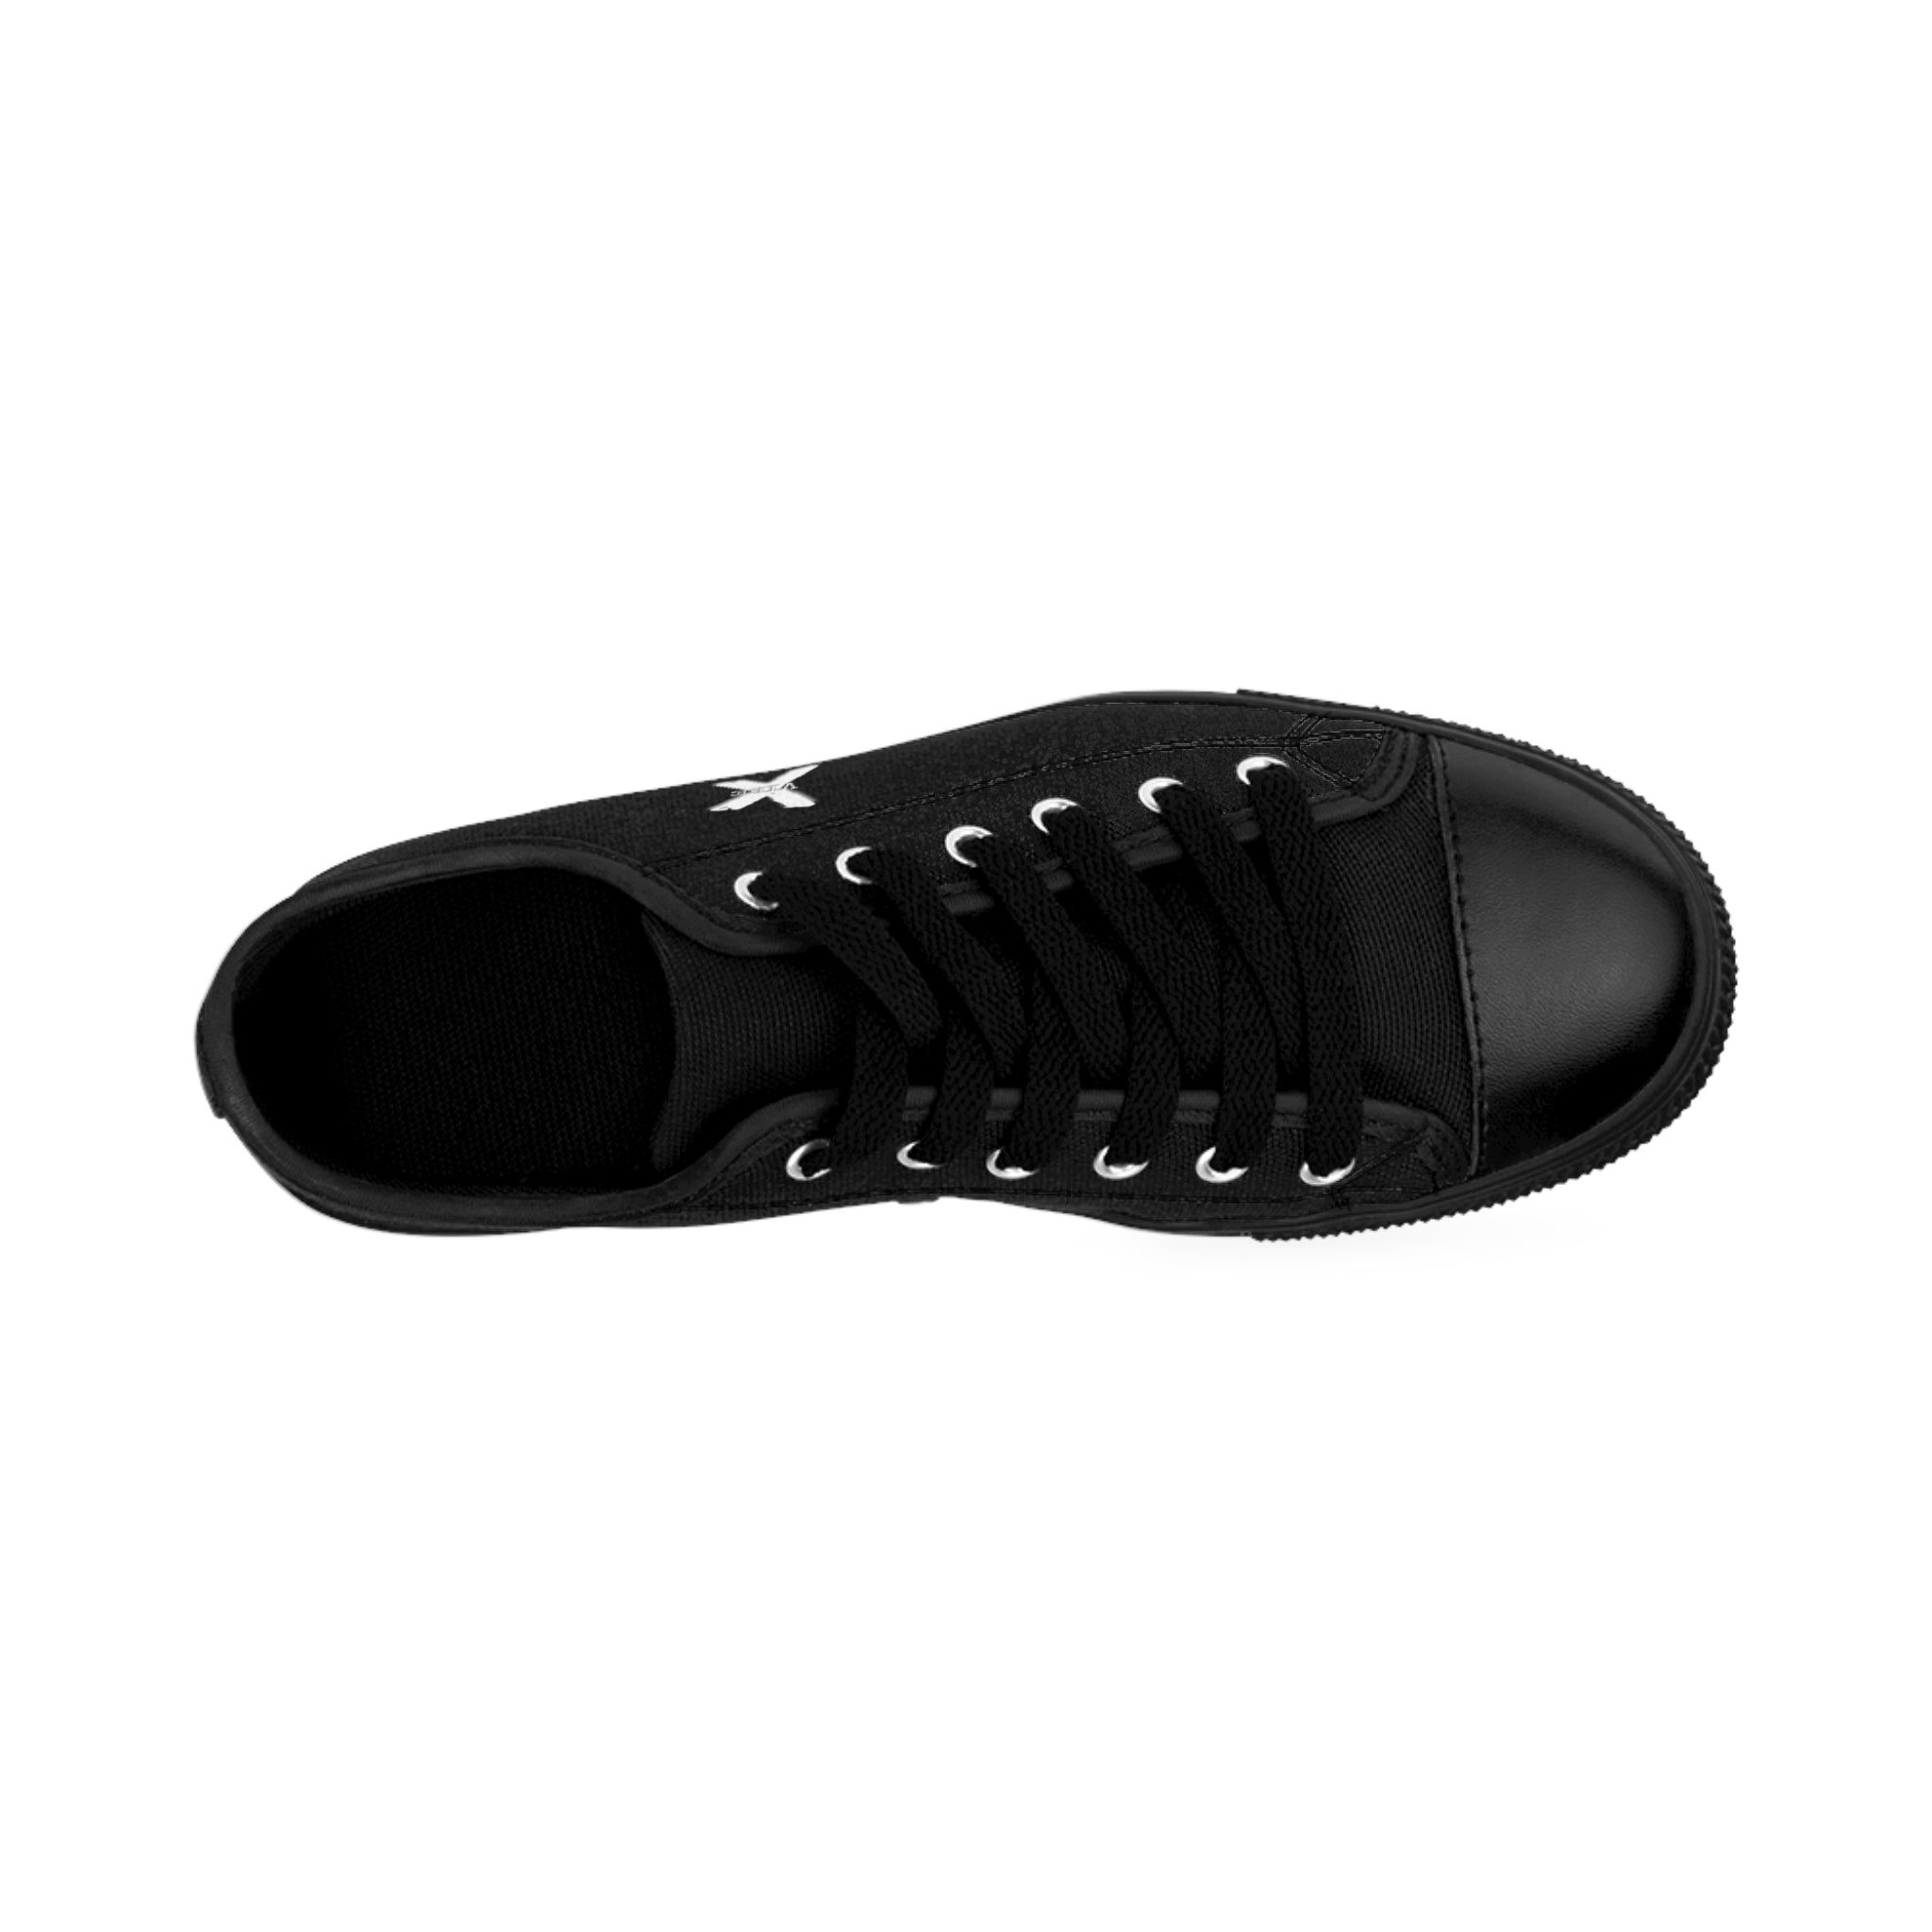 X-Vibe Women's Sneakers (Black/W)